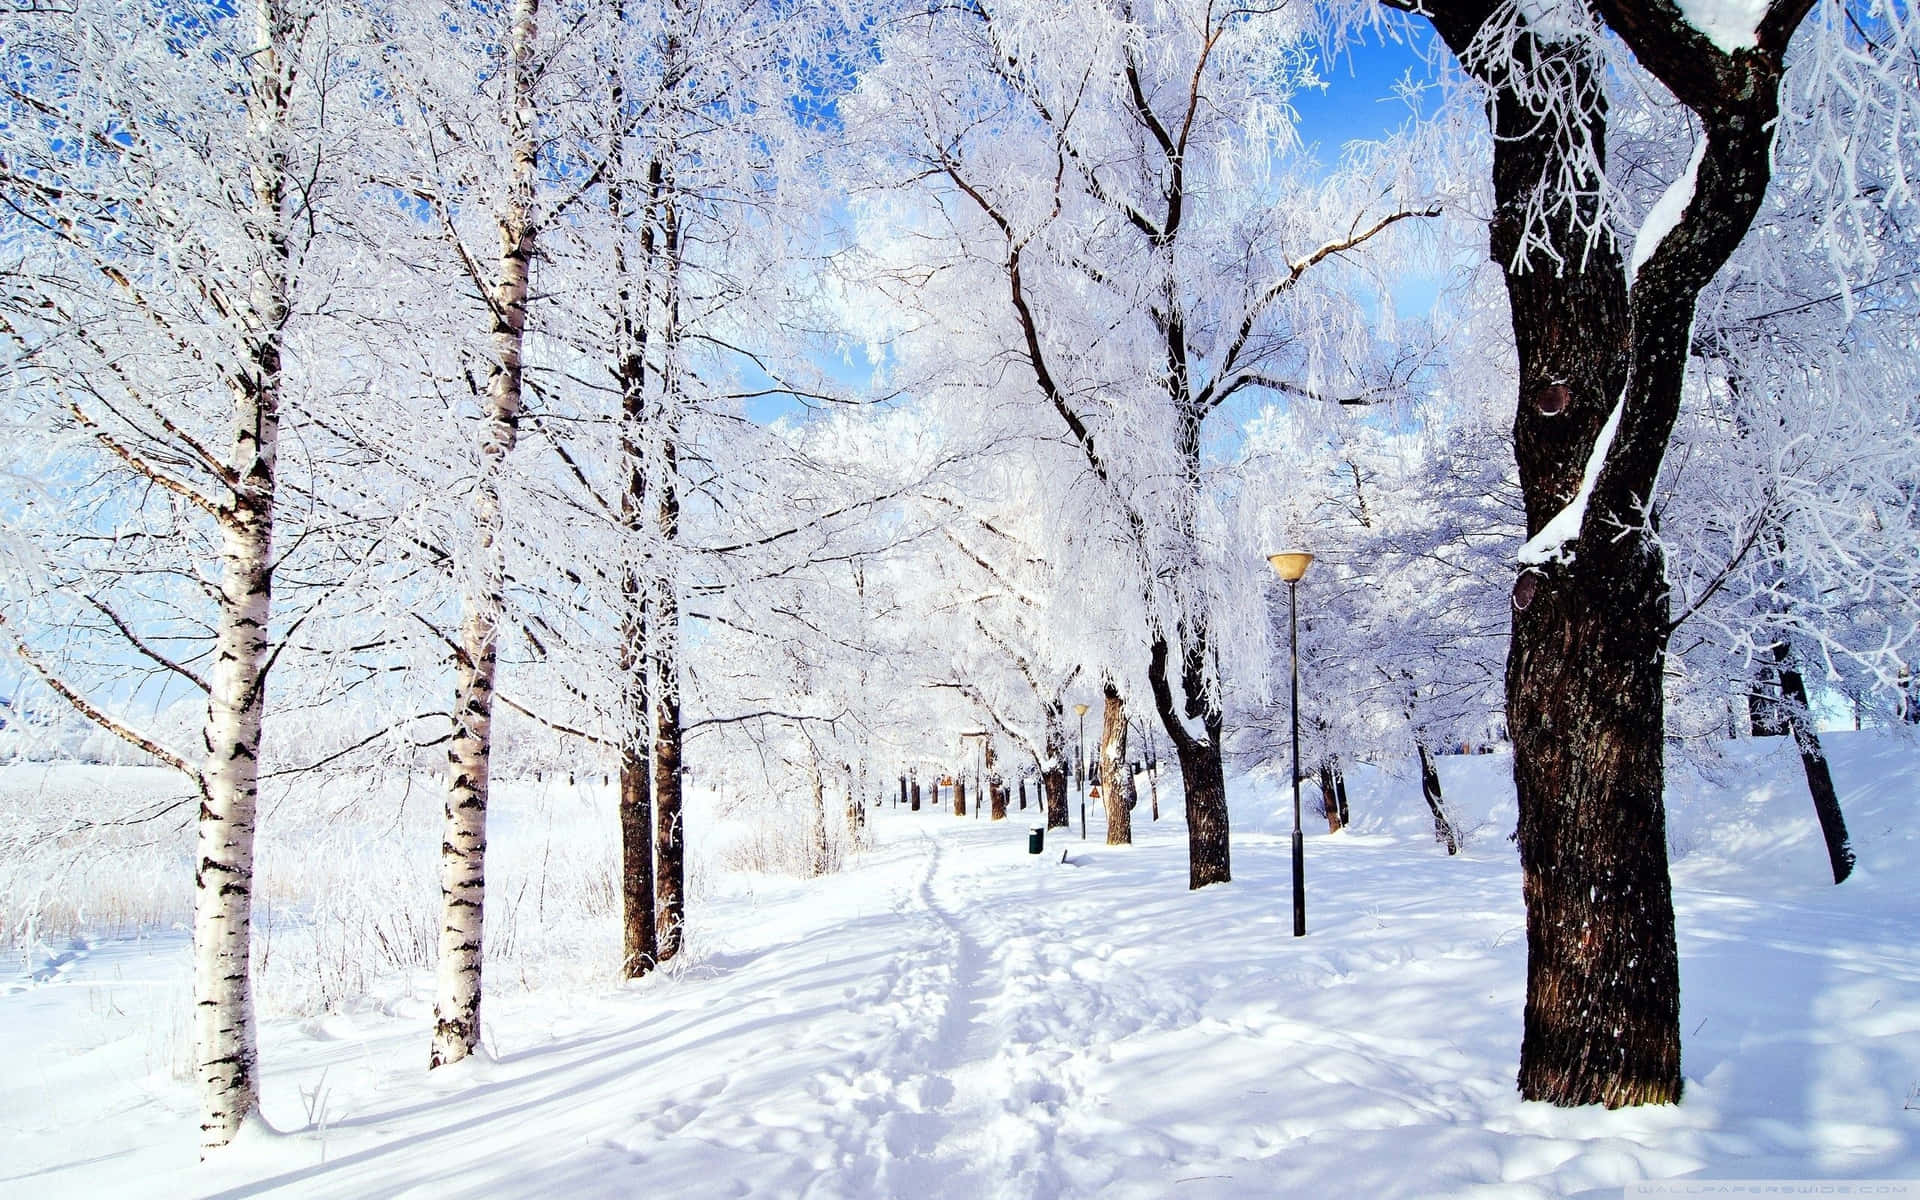 Enjoy the Snow Scene this Winter Wallpaper